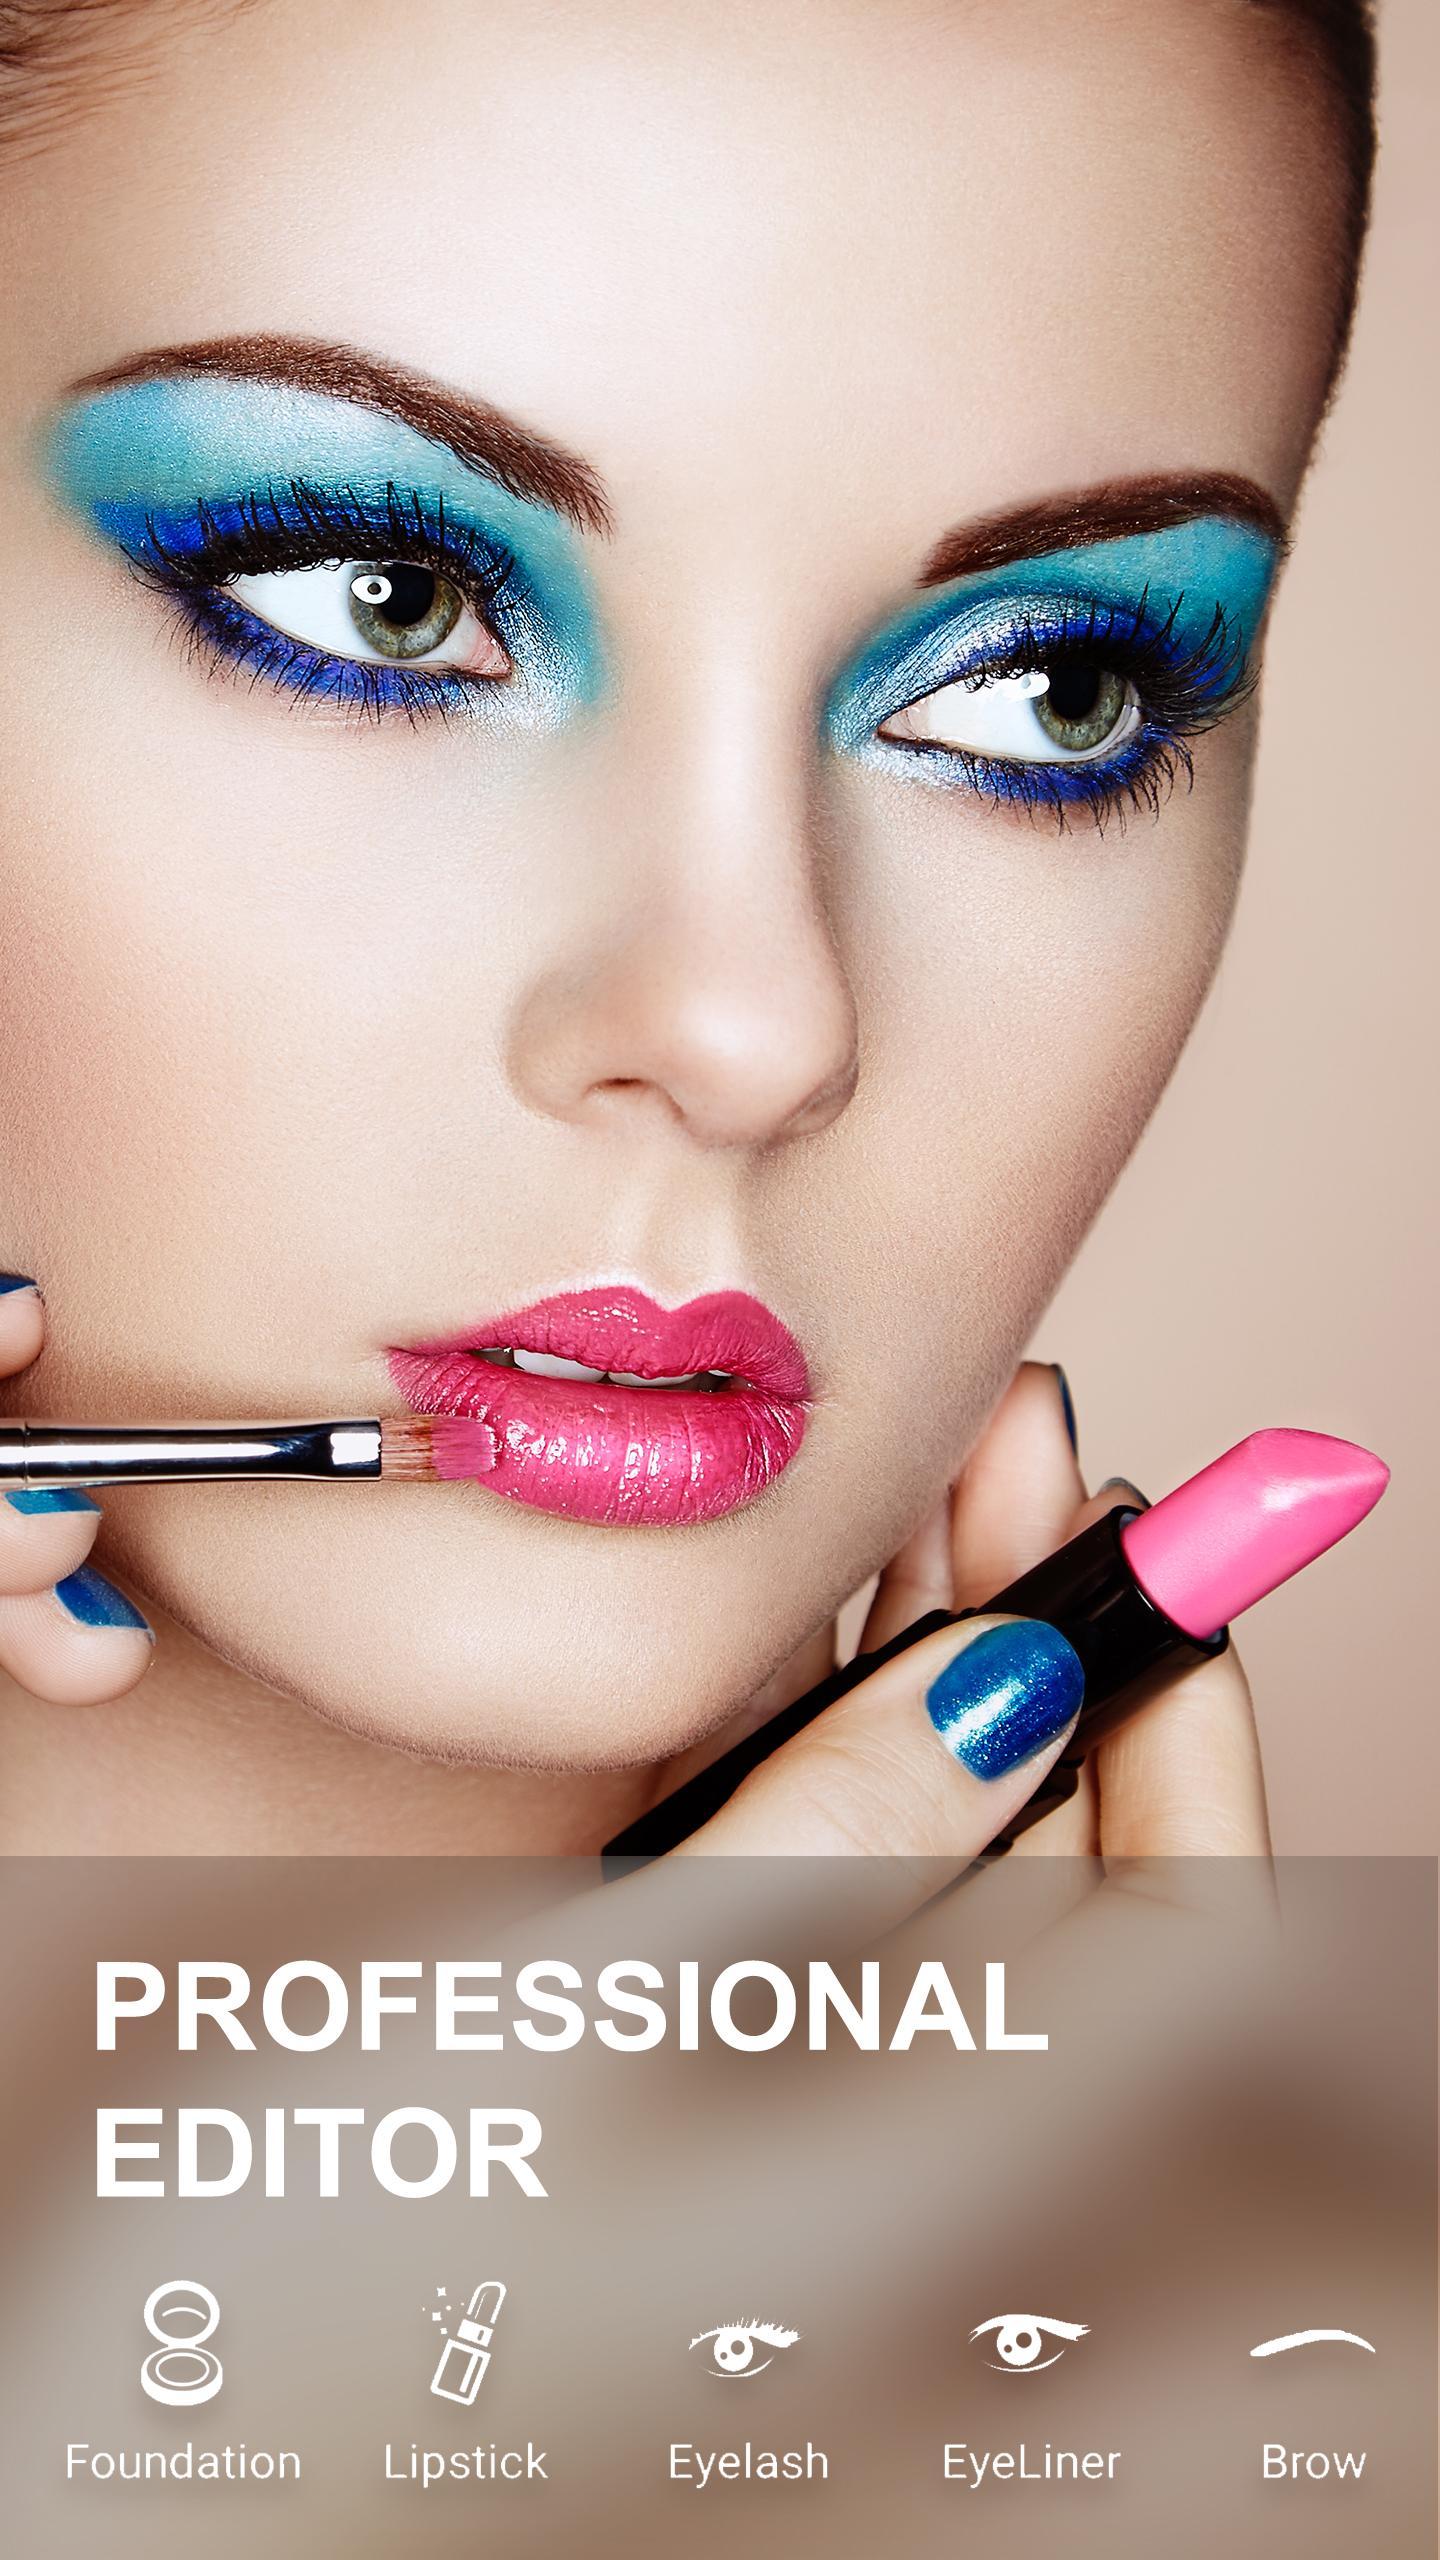 Alperne sne hvid Luftpost Face Makeup Camera & Beauty Photo Makeup Editor APK for Android Download